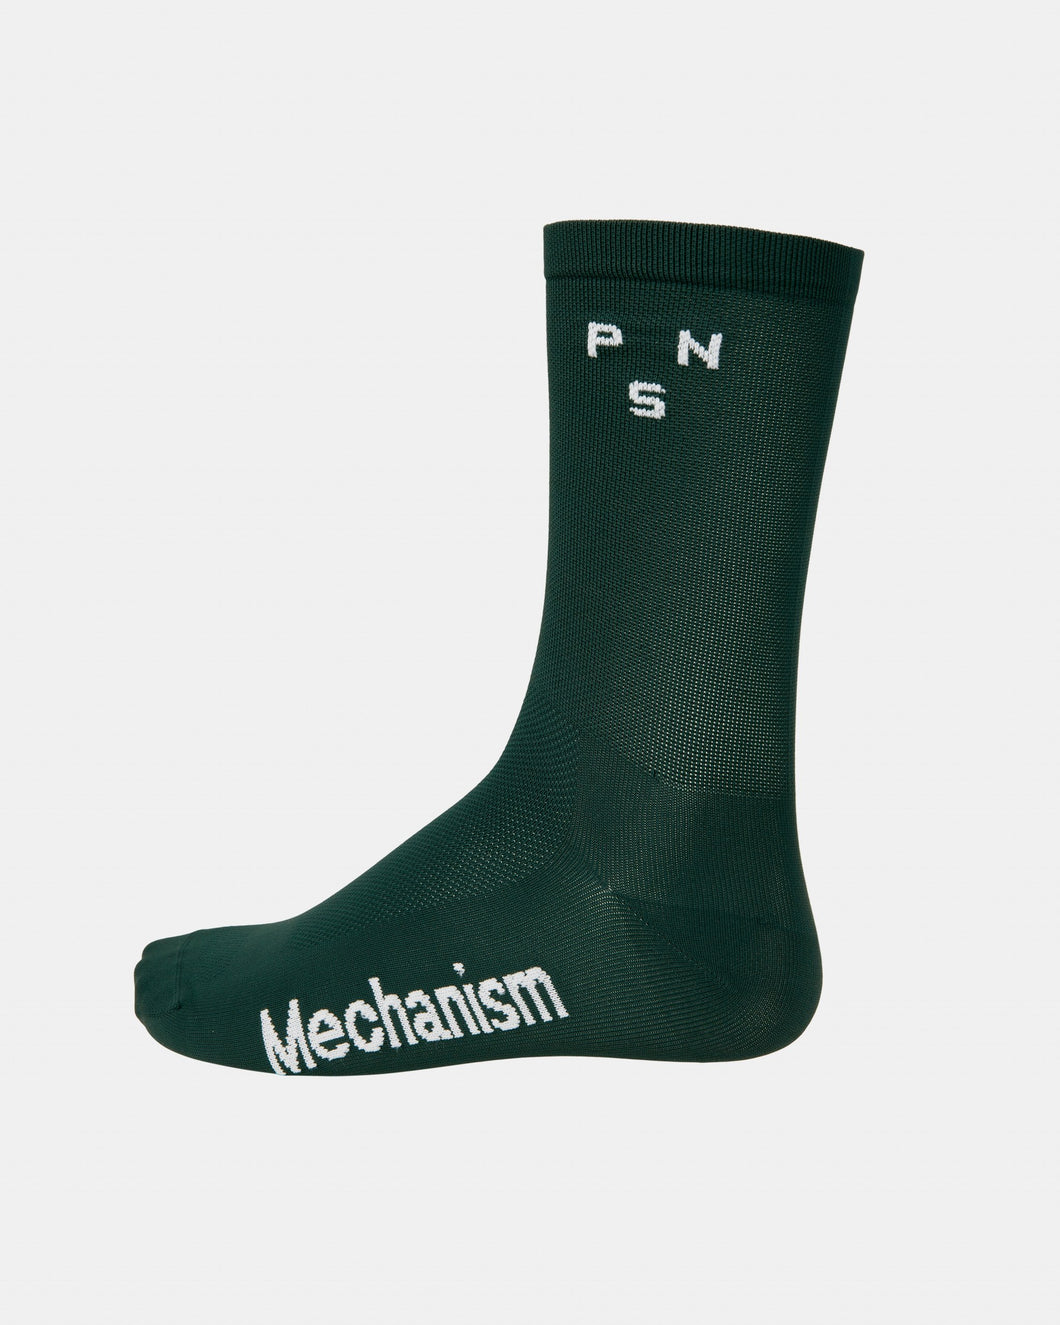 Pas Normal Studios - Mechanism Socks - Petroleum